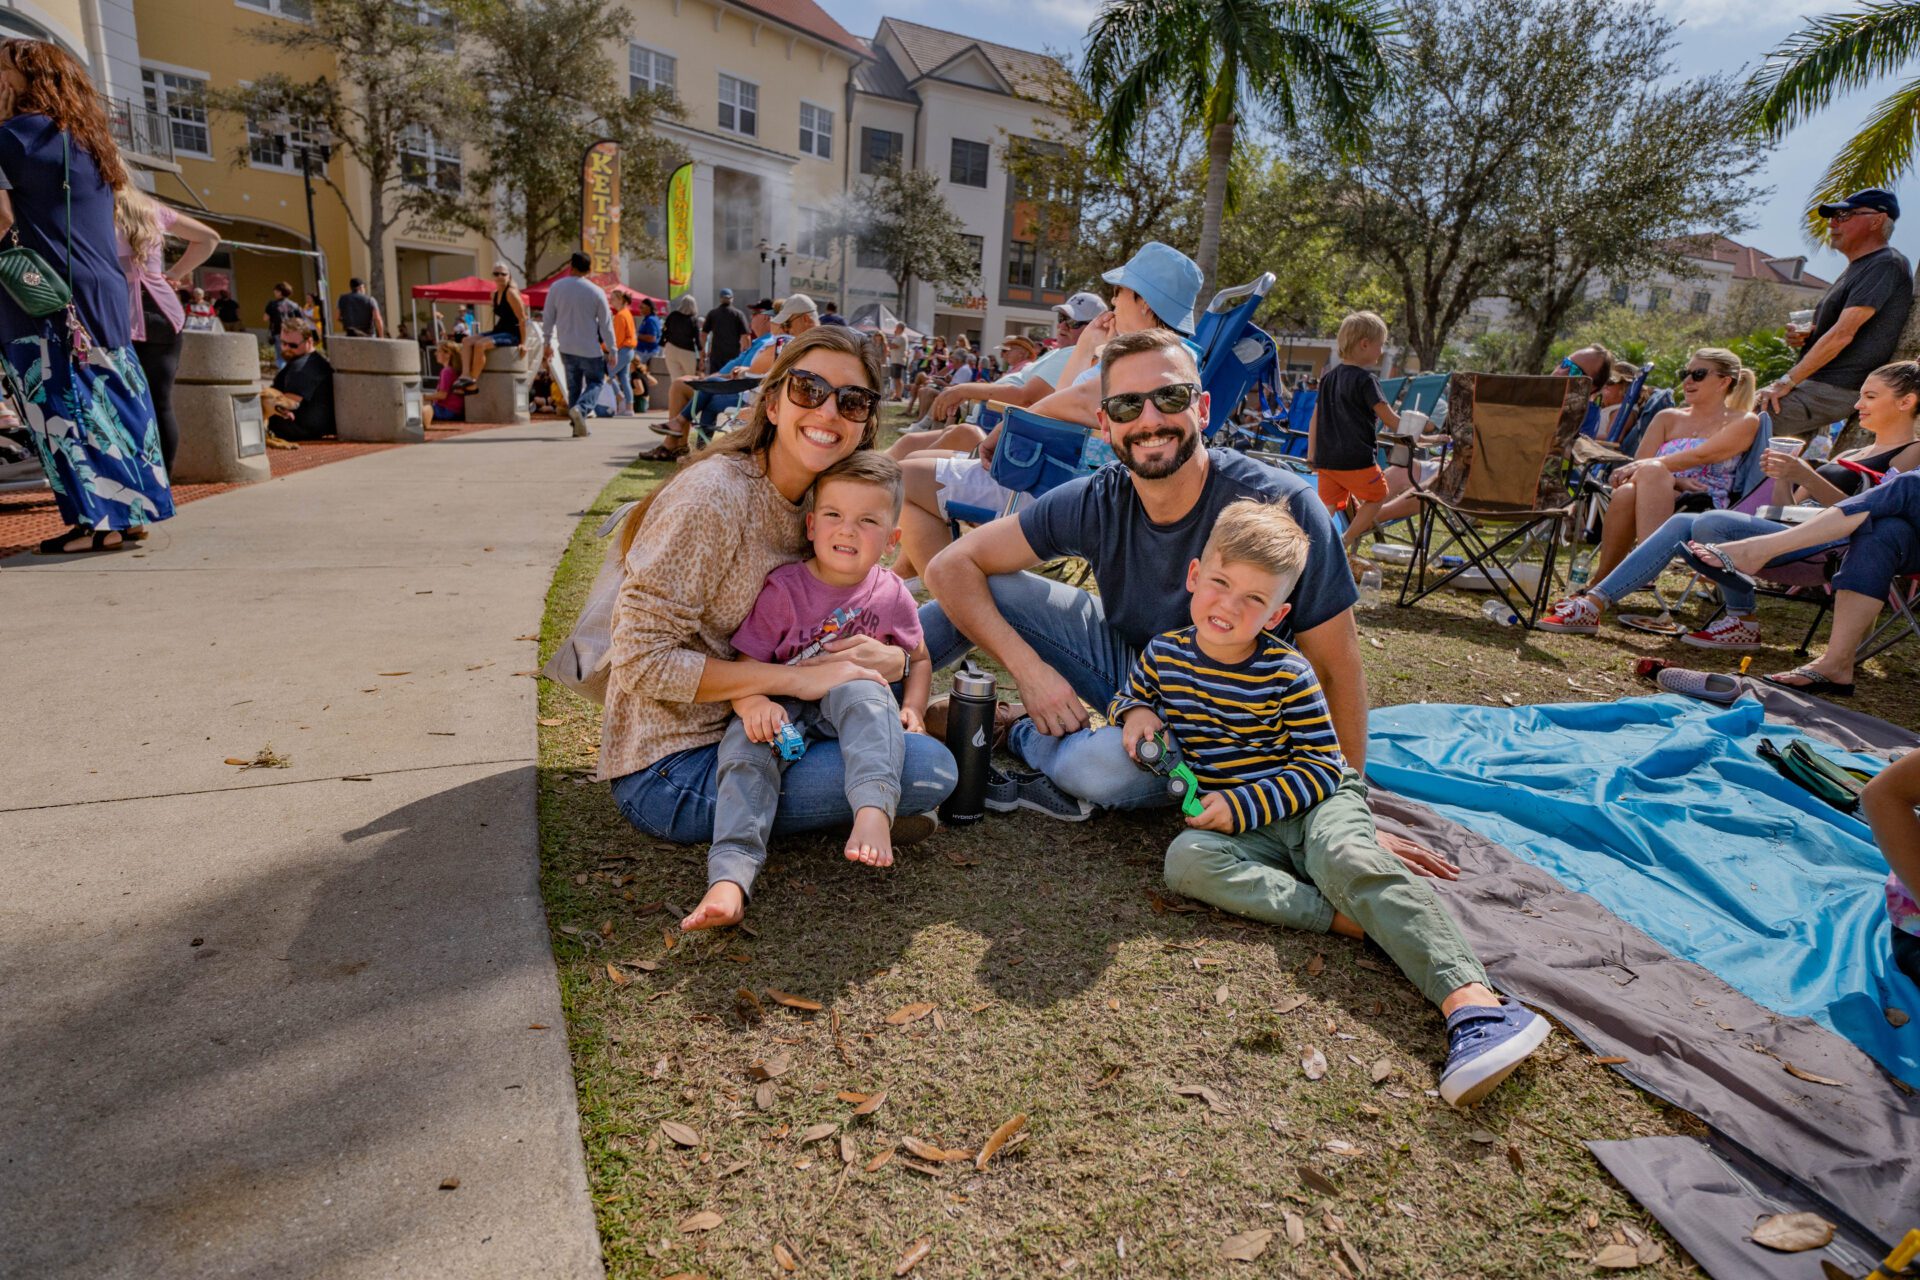 Family enjoys outdoor festival in Ave Maria, FL